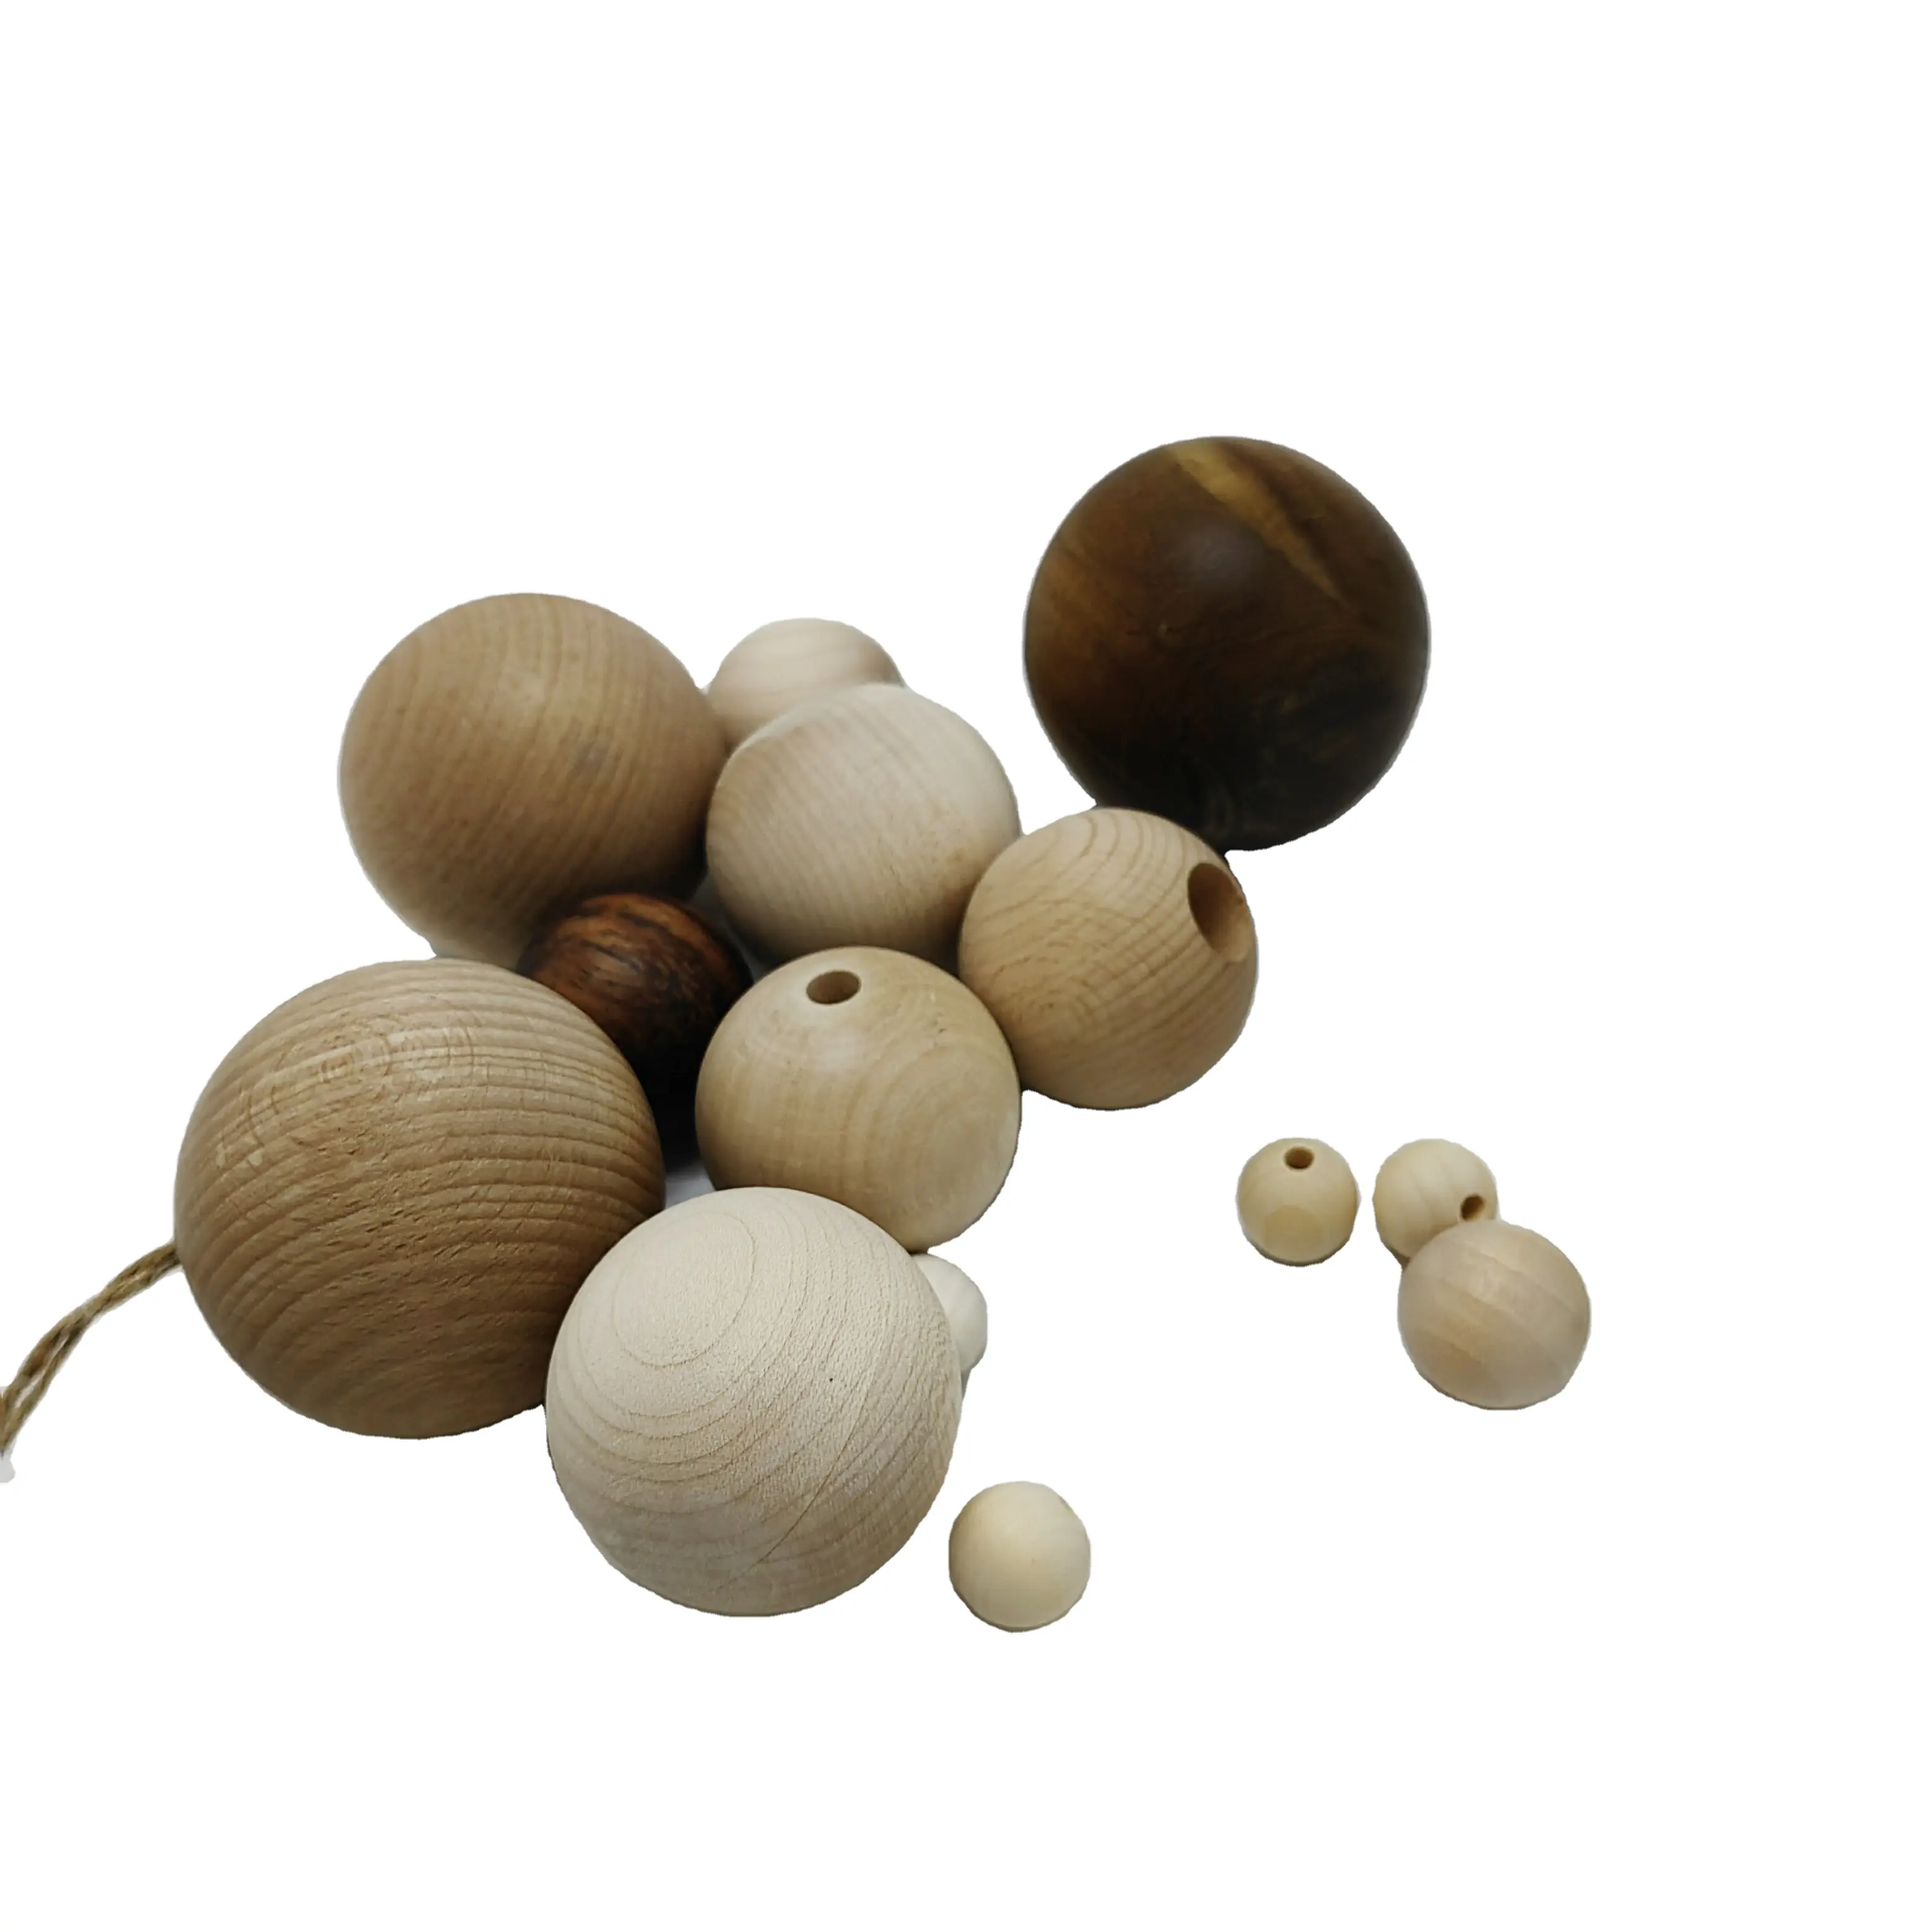 Wooden Round Ball DIY Decorative Wood Crafting Balls